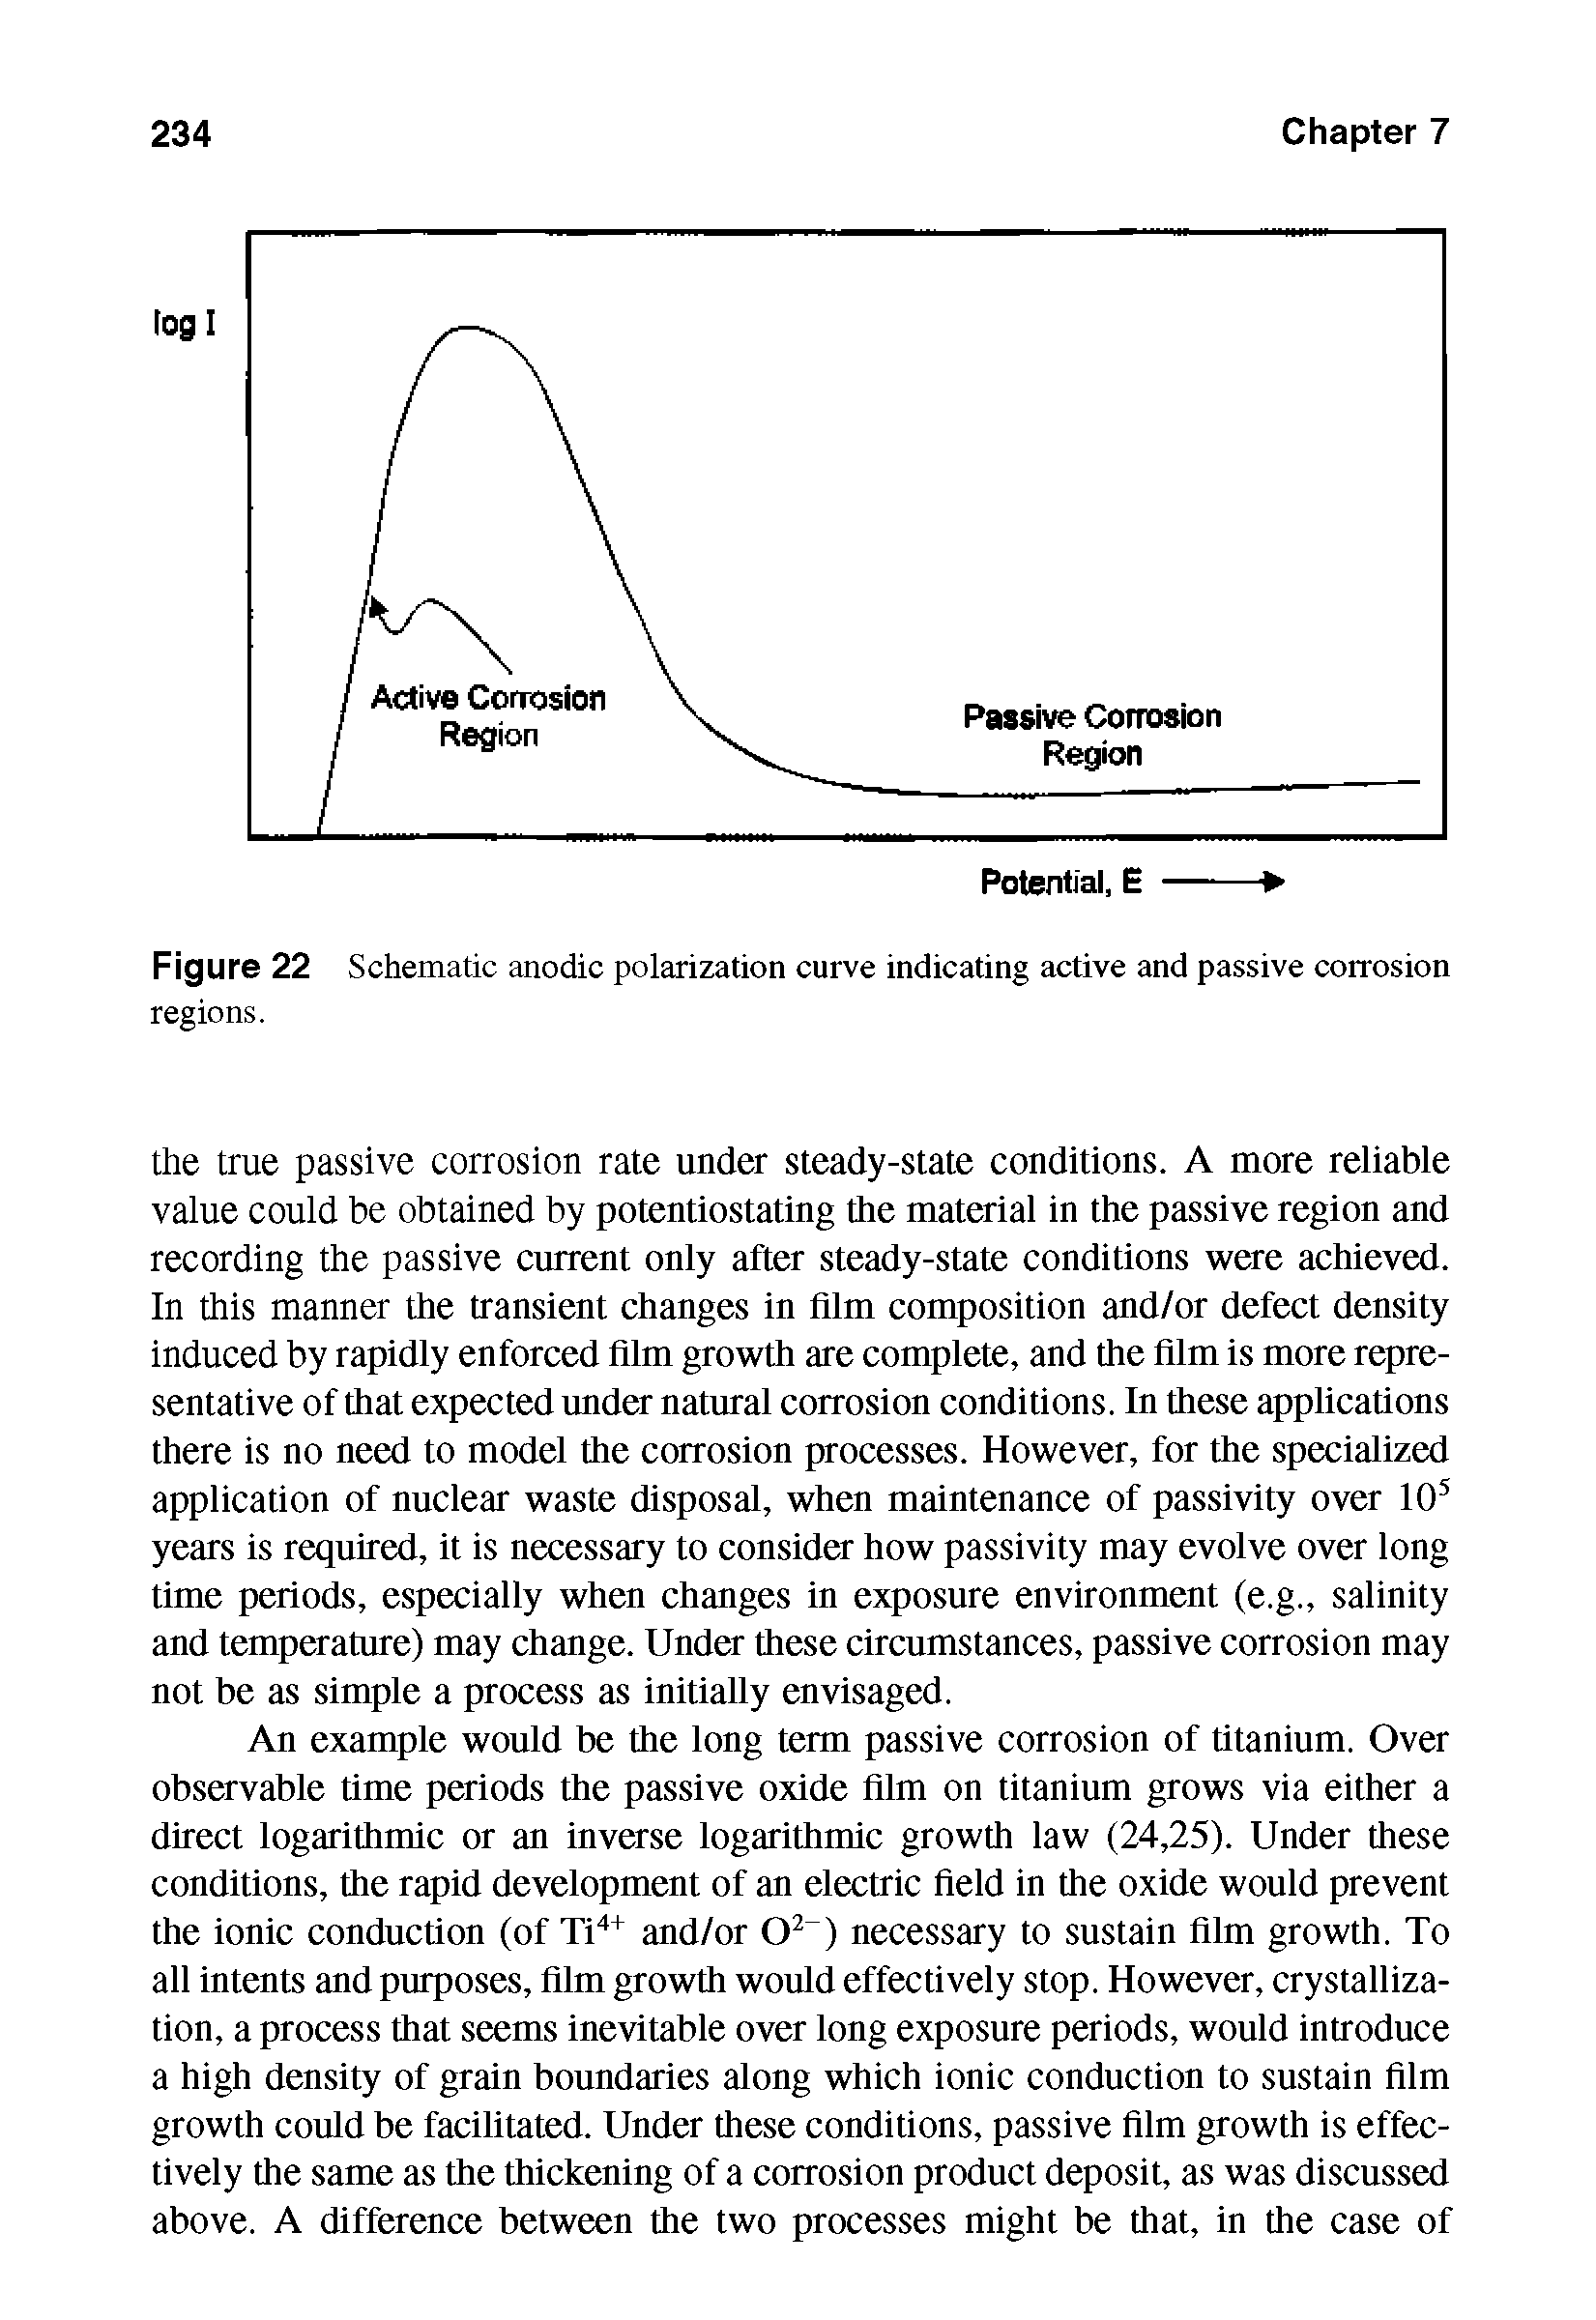 Figure 22 Schematic anodic polarization curve indicating active and passive corrosion regions.